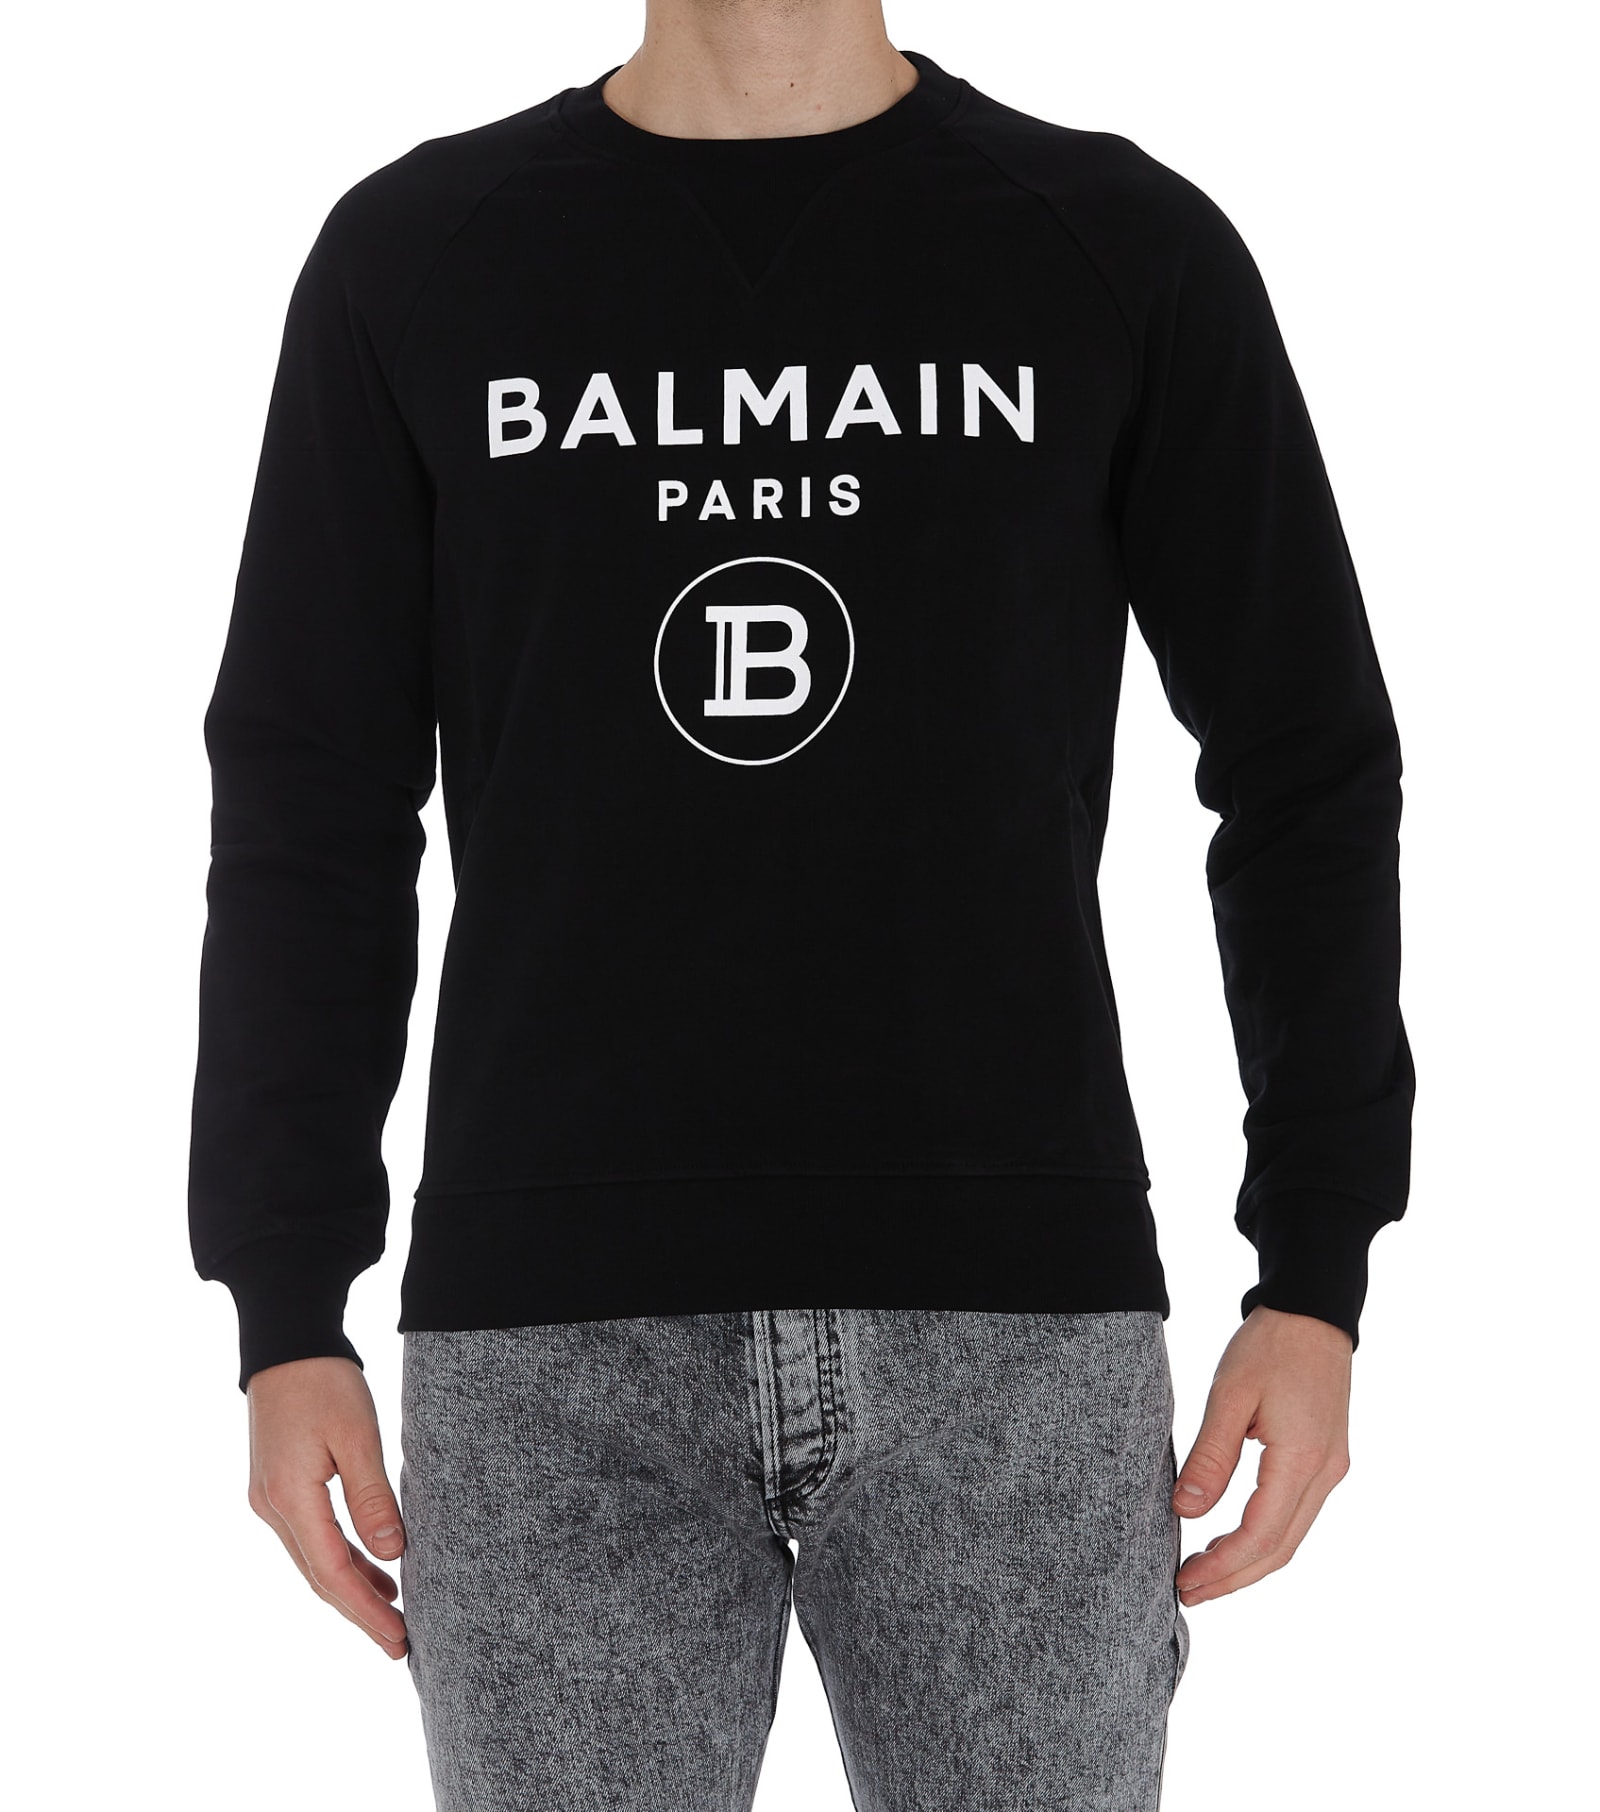 Balmain Paris Sweatshirt In Black